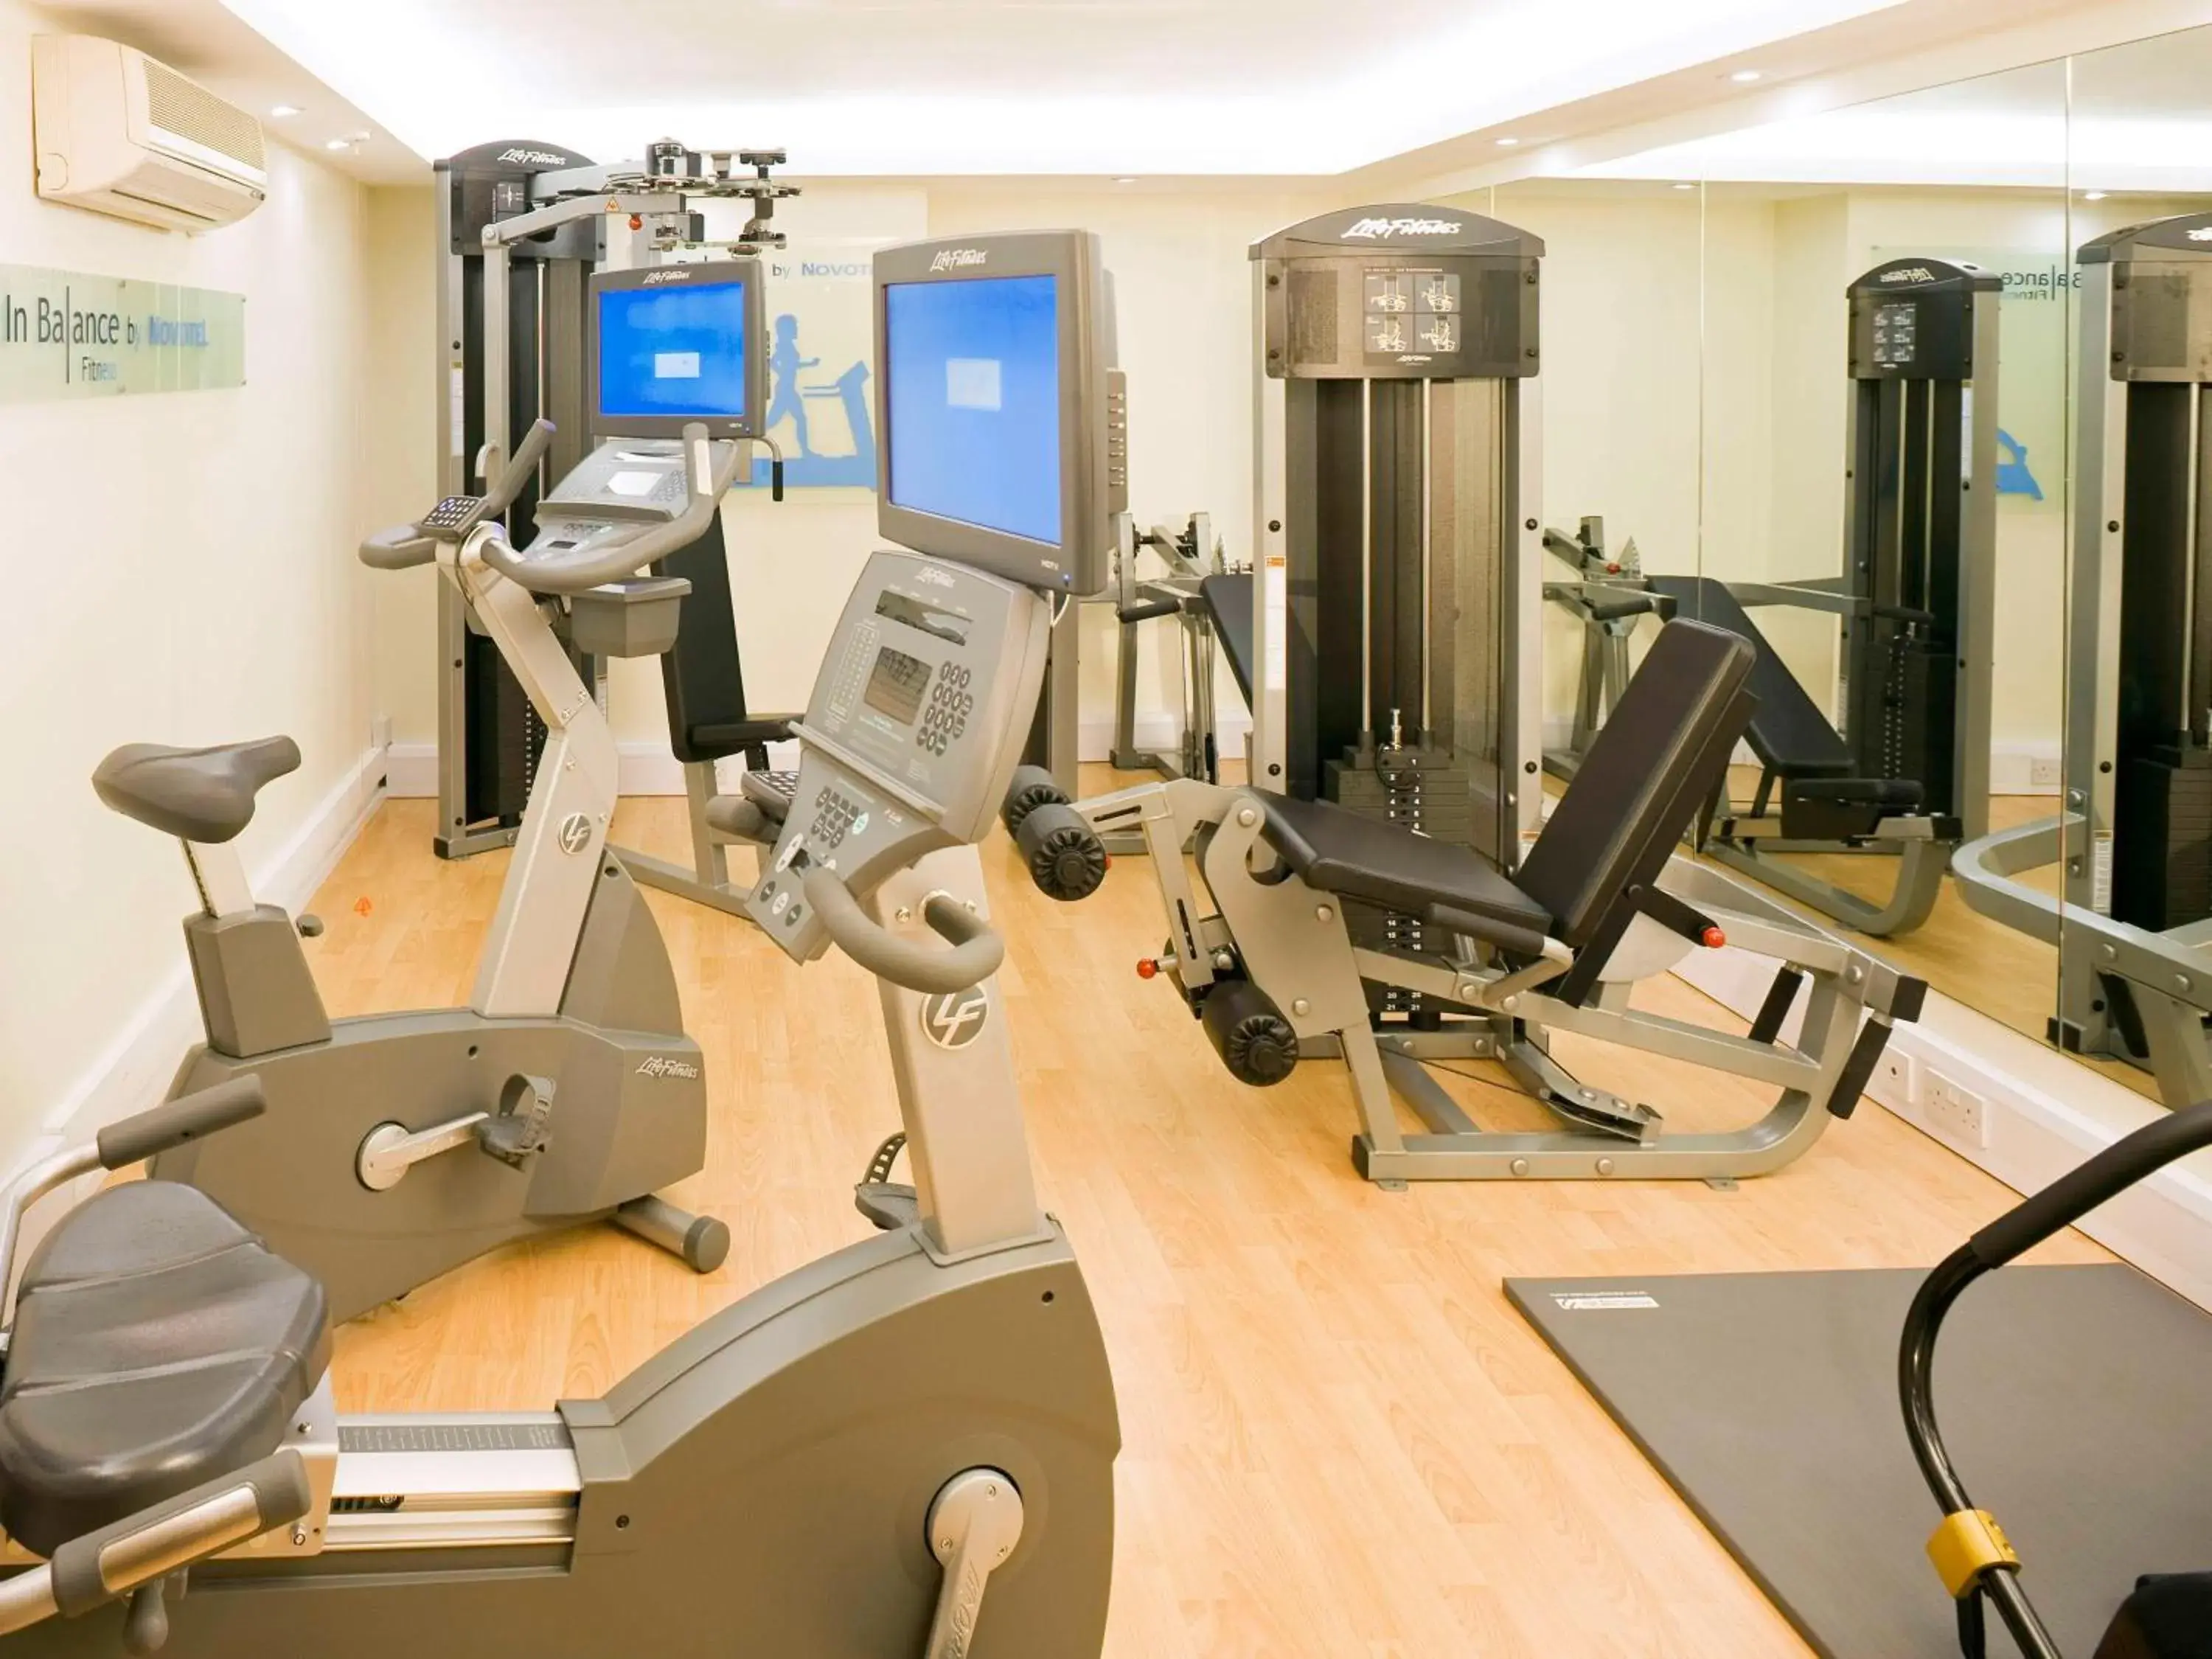 Fitness centre/facilities, Fitness Center/Facilities in Novotel Birmingham Airport